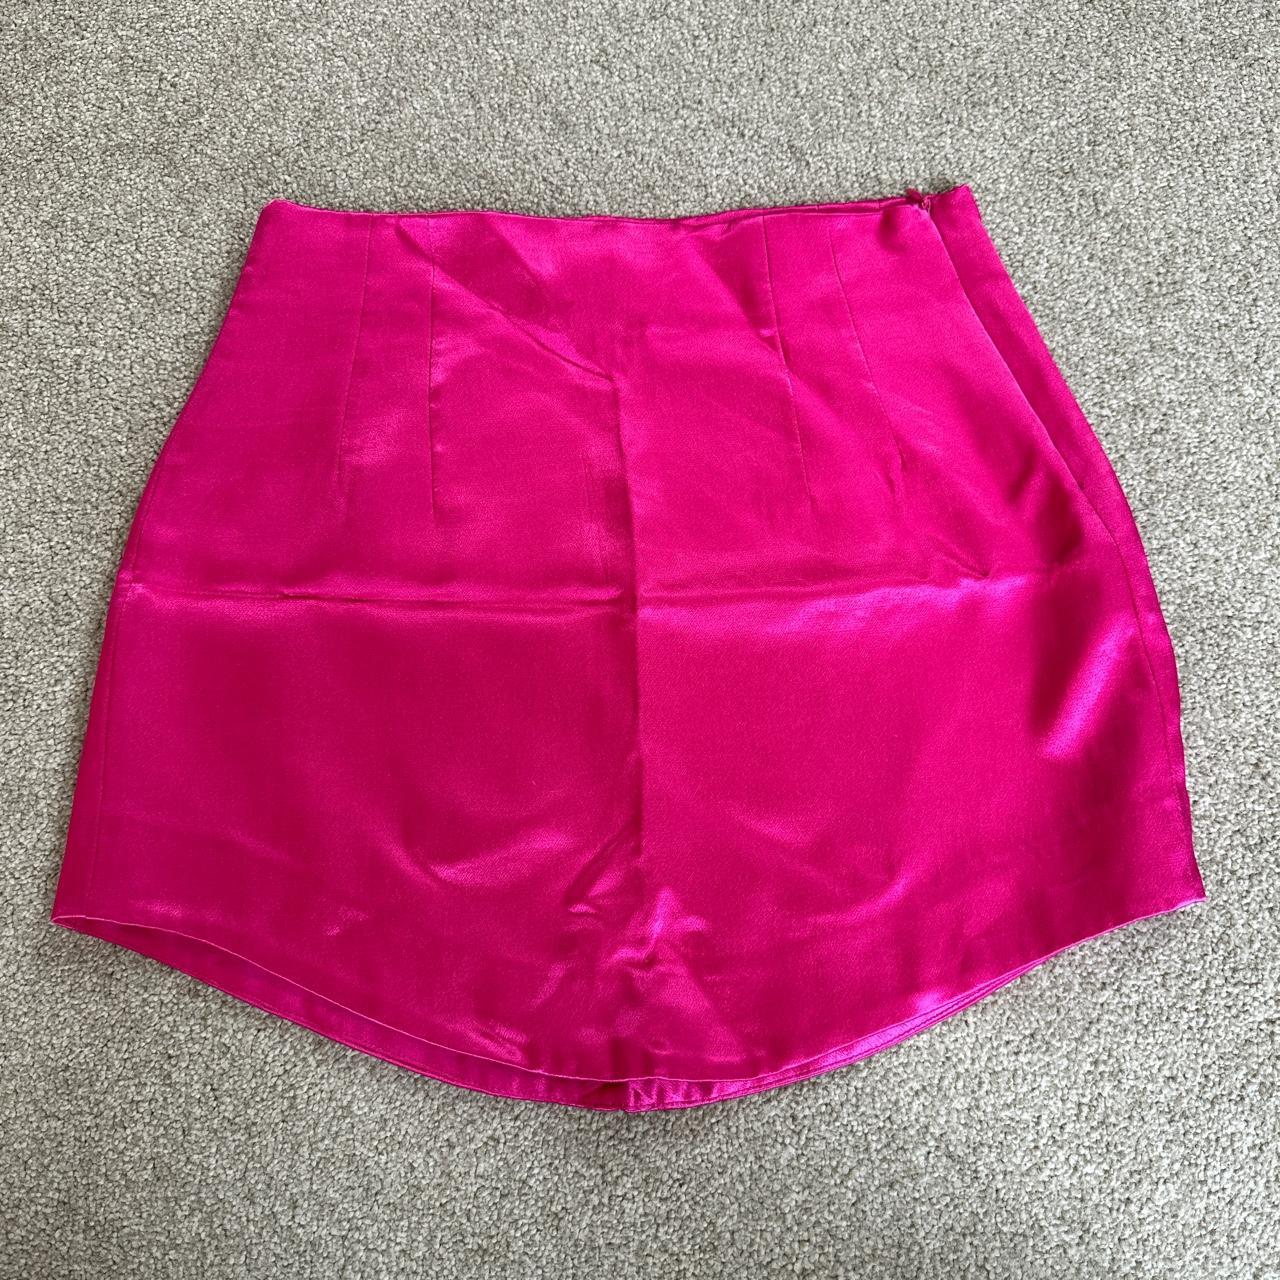 Satin Zara pink mini skirt Size S - worn a couple of... - Depop